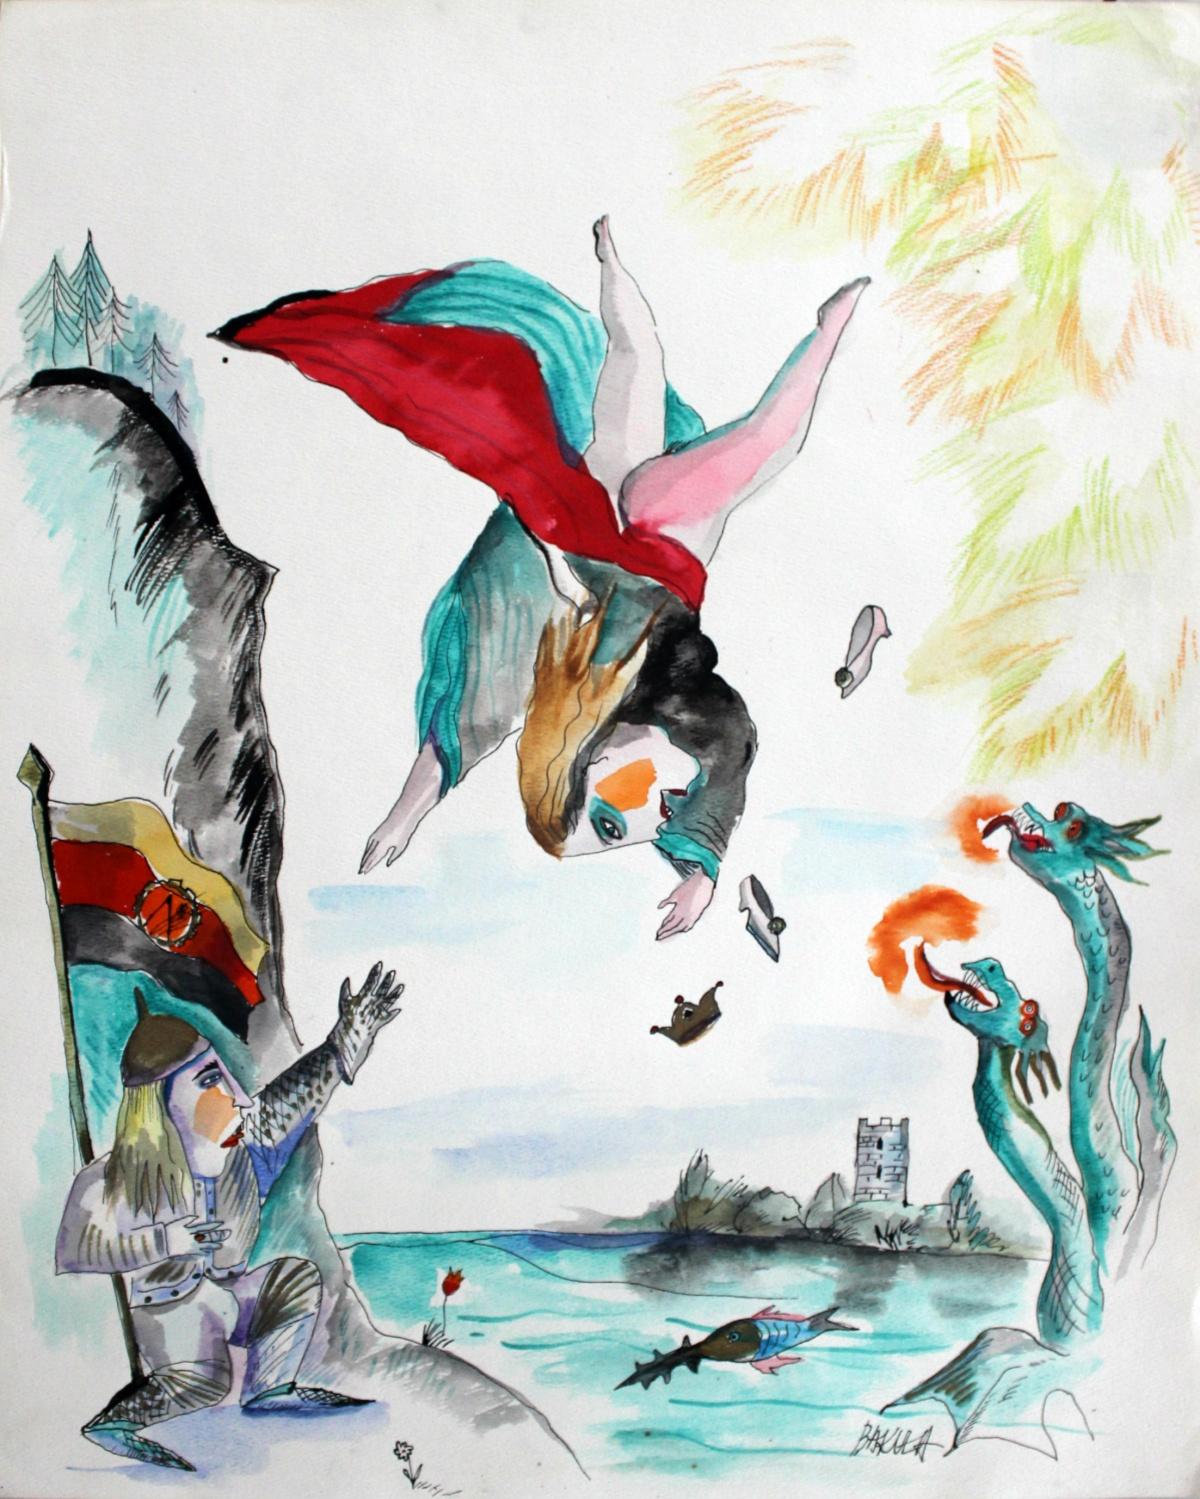 Figurative Art Hanna Bakuła - « Fighting the dragons », XXIe siècle, aquarelle figurative et colorée